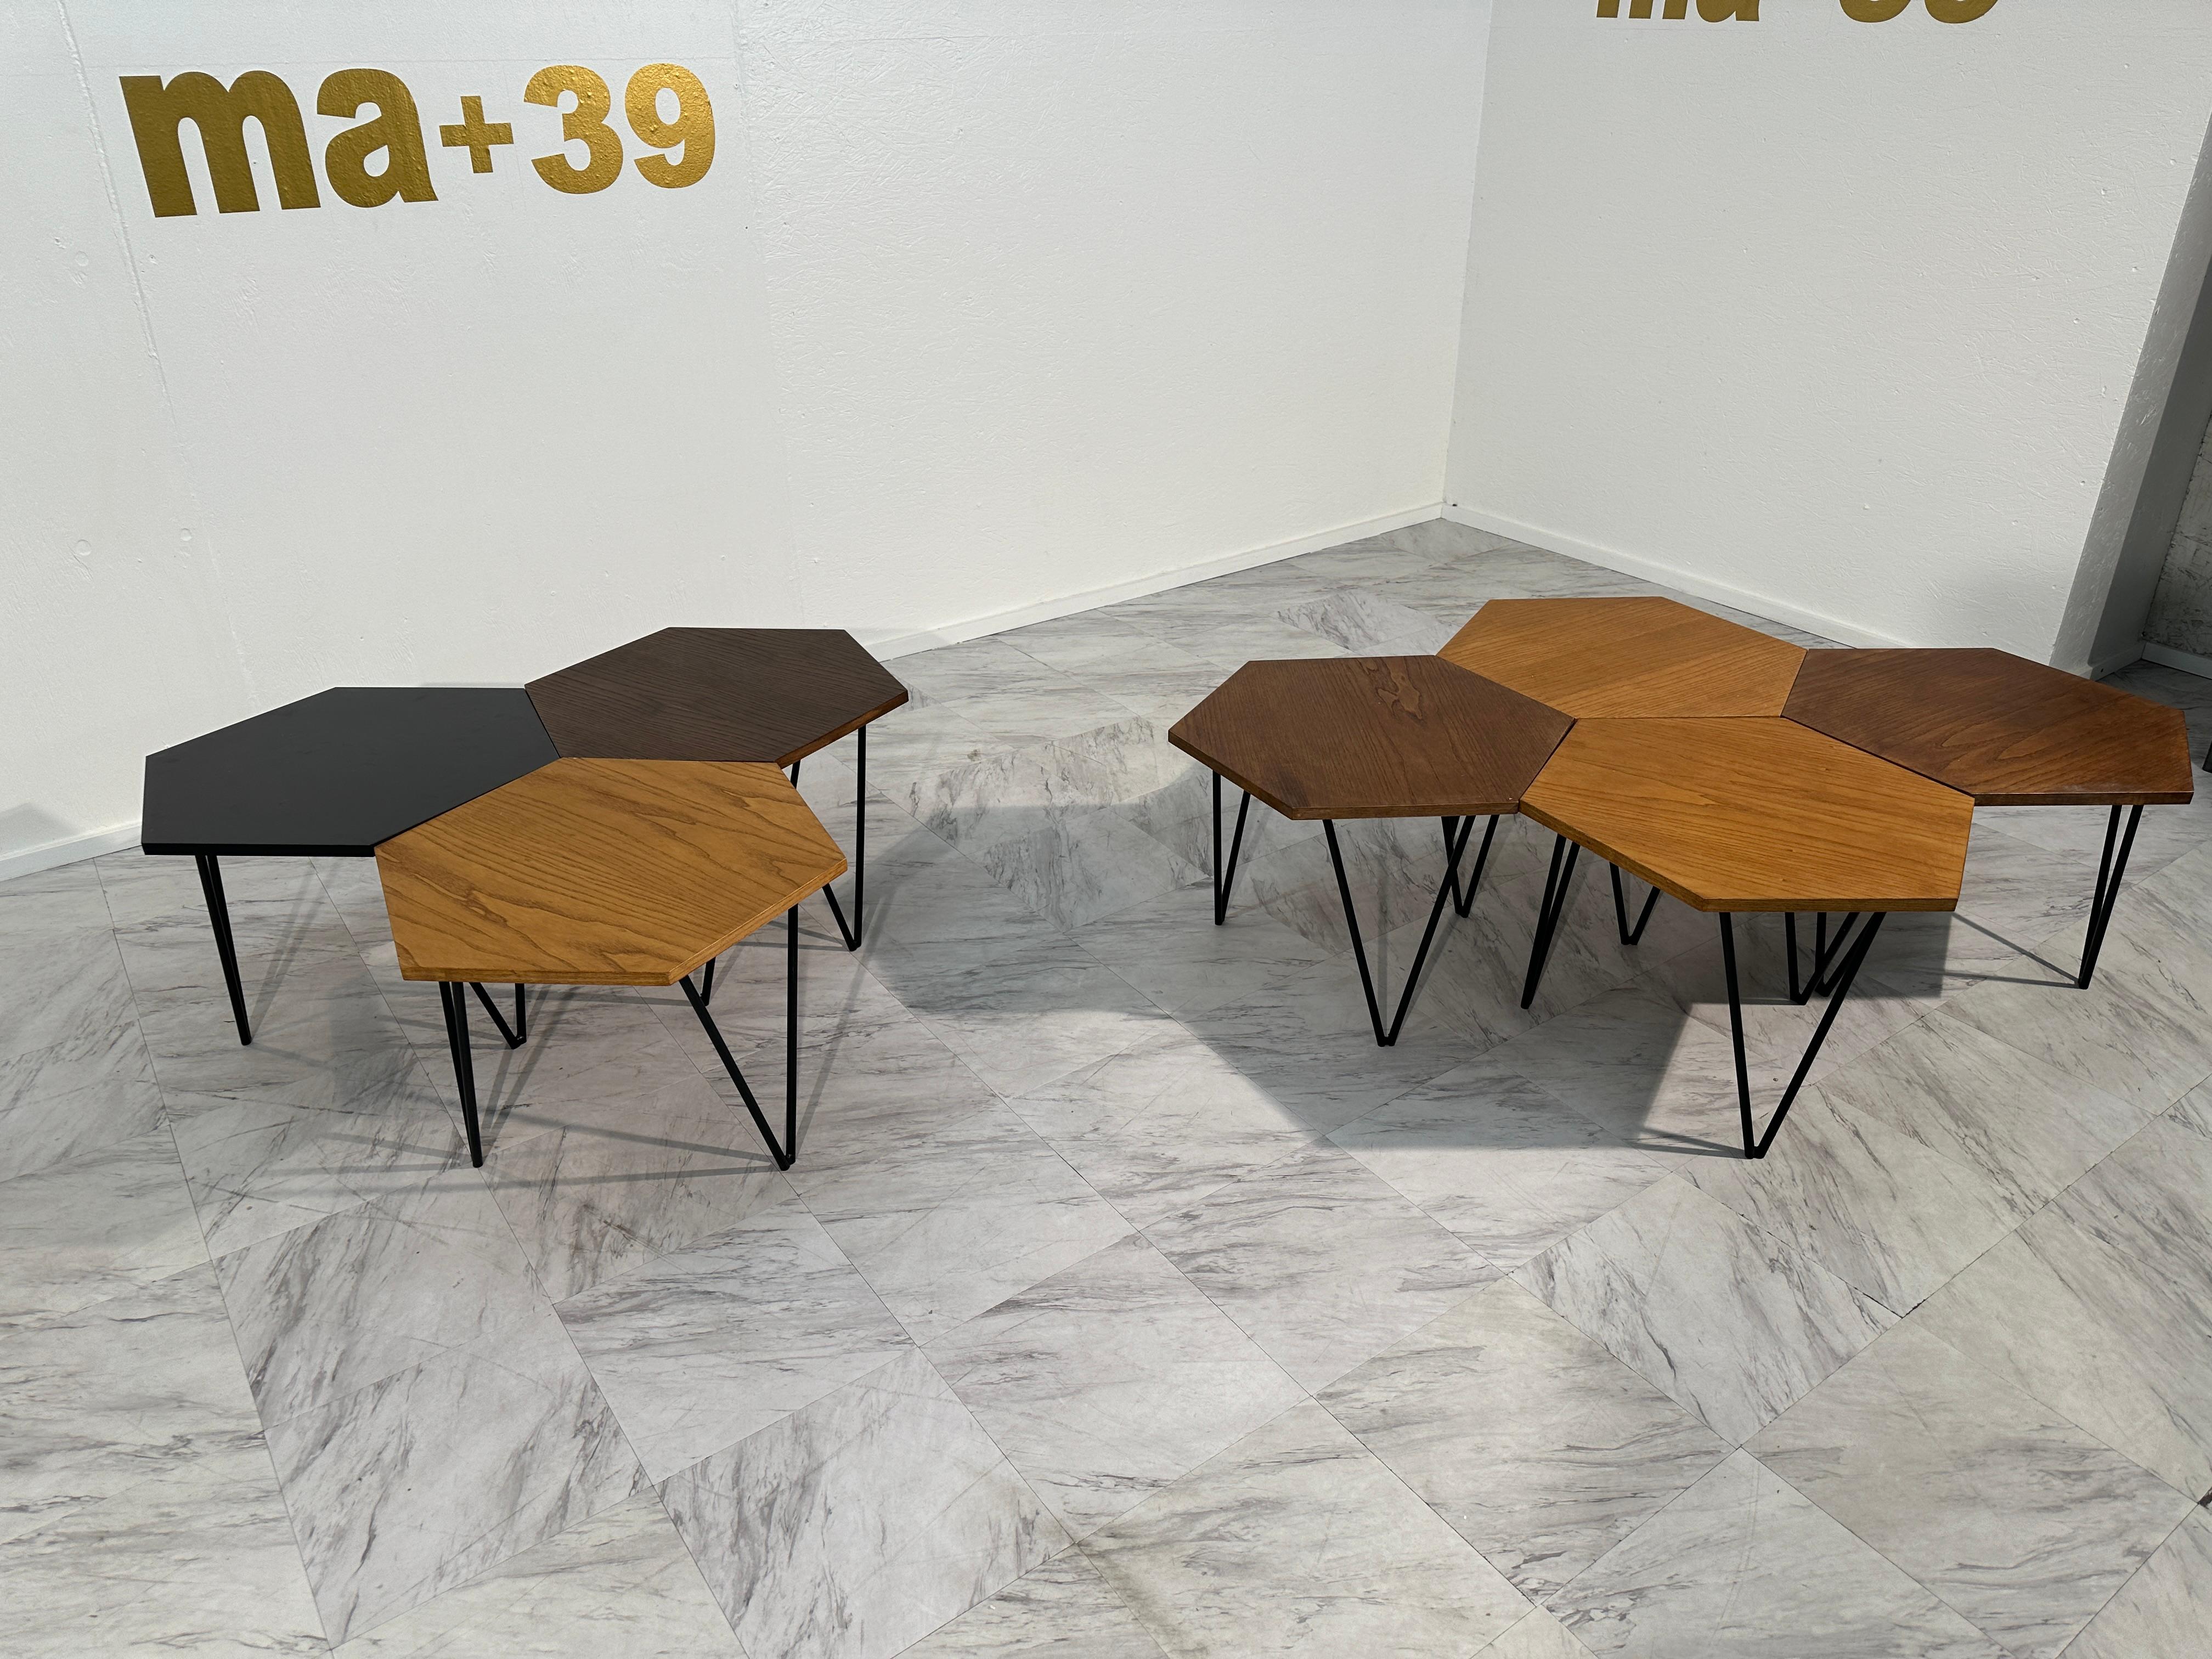 Set of 7 Gio Ponti Modular Hexagonal Coffee Tables, ISA Bergamo, Italy, 1950s For Sale 2